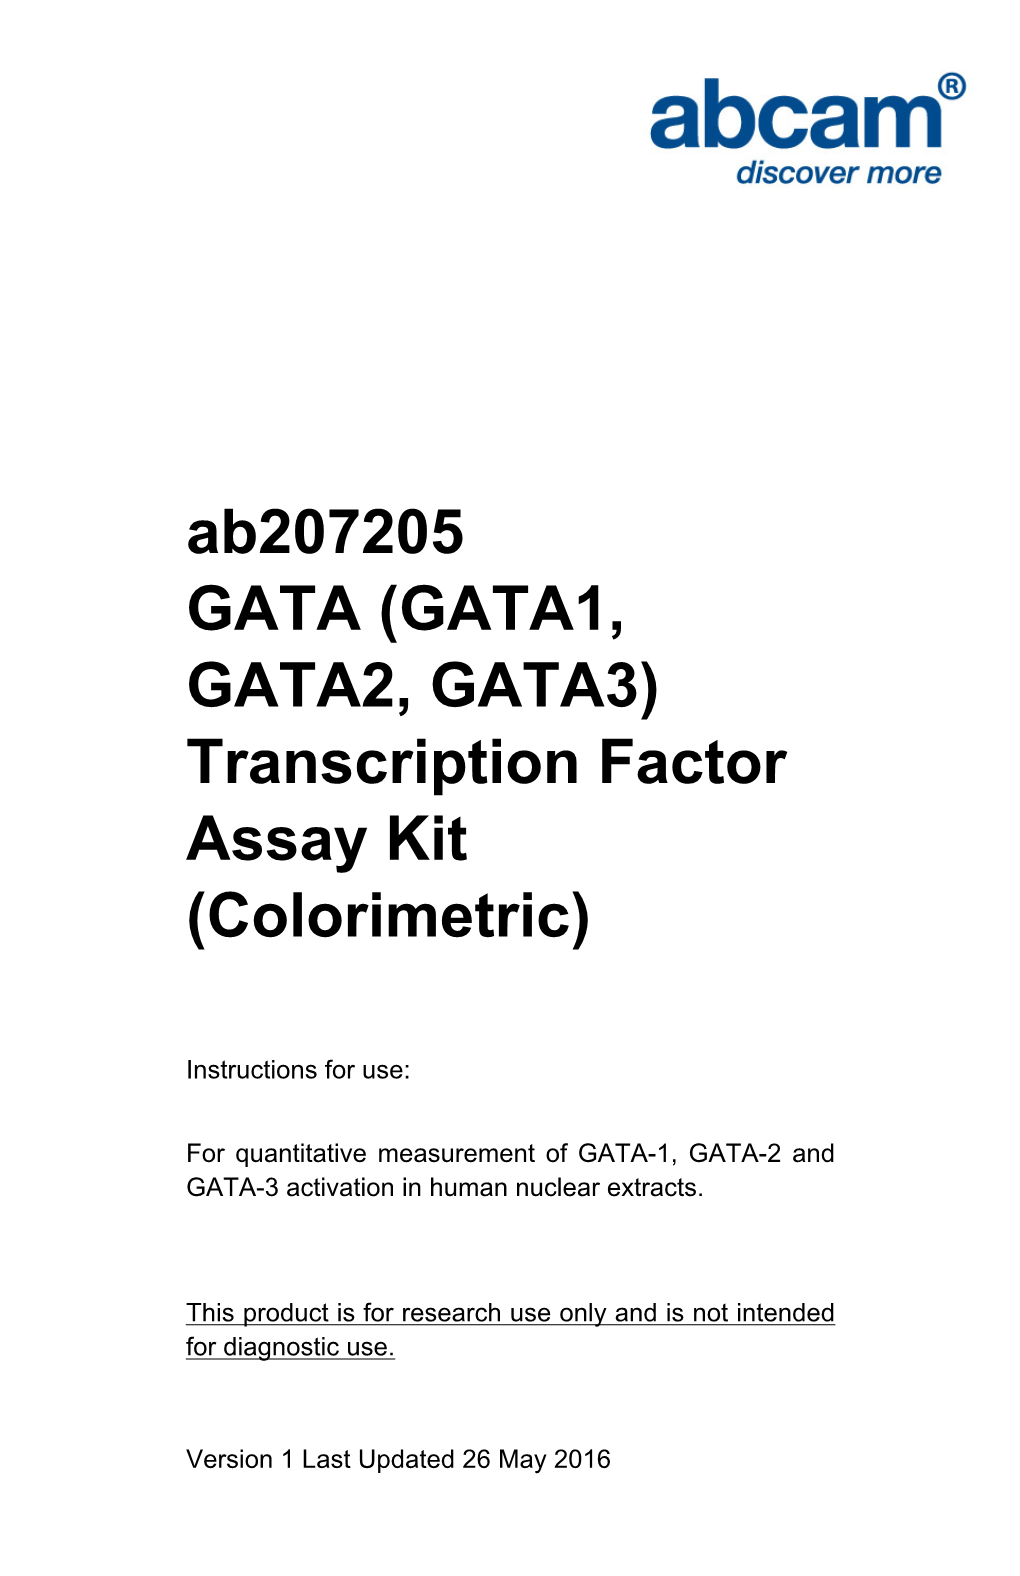 Ab207205 GATA (GATA1, GATA2, GATA3) Transcription Factor Assay Kit (Colorimetric)